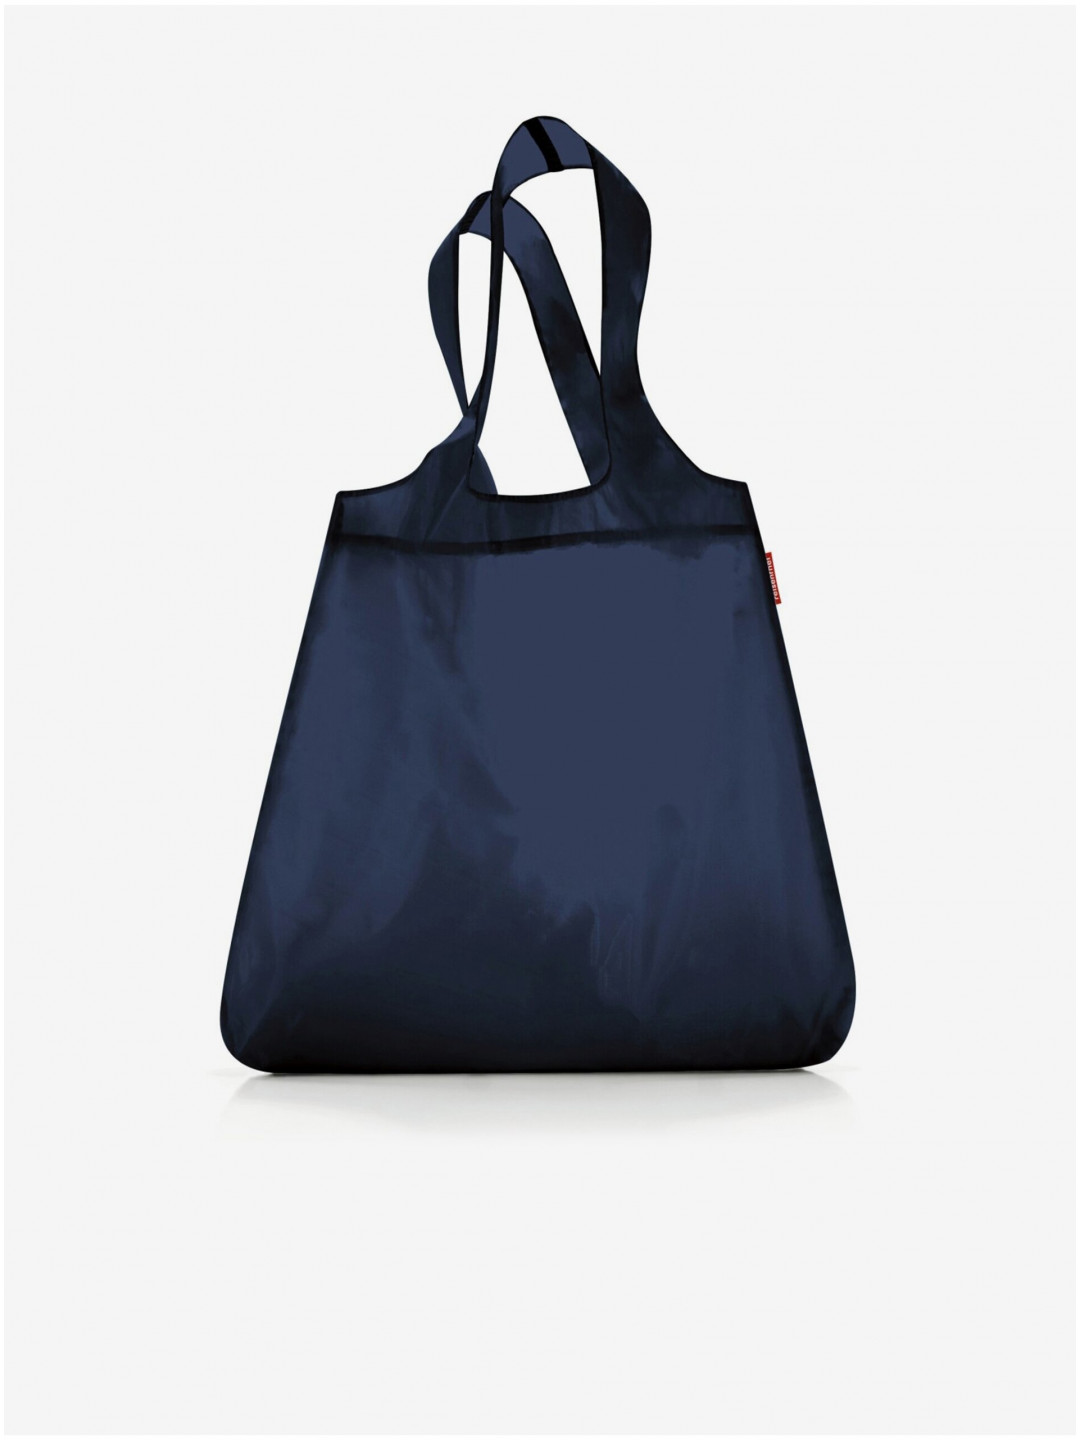 Tmavě modrá nákupní taška Reisenthel Mini Maxi Shopper